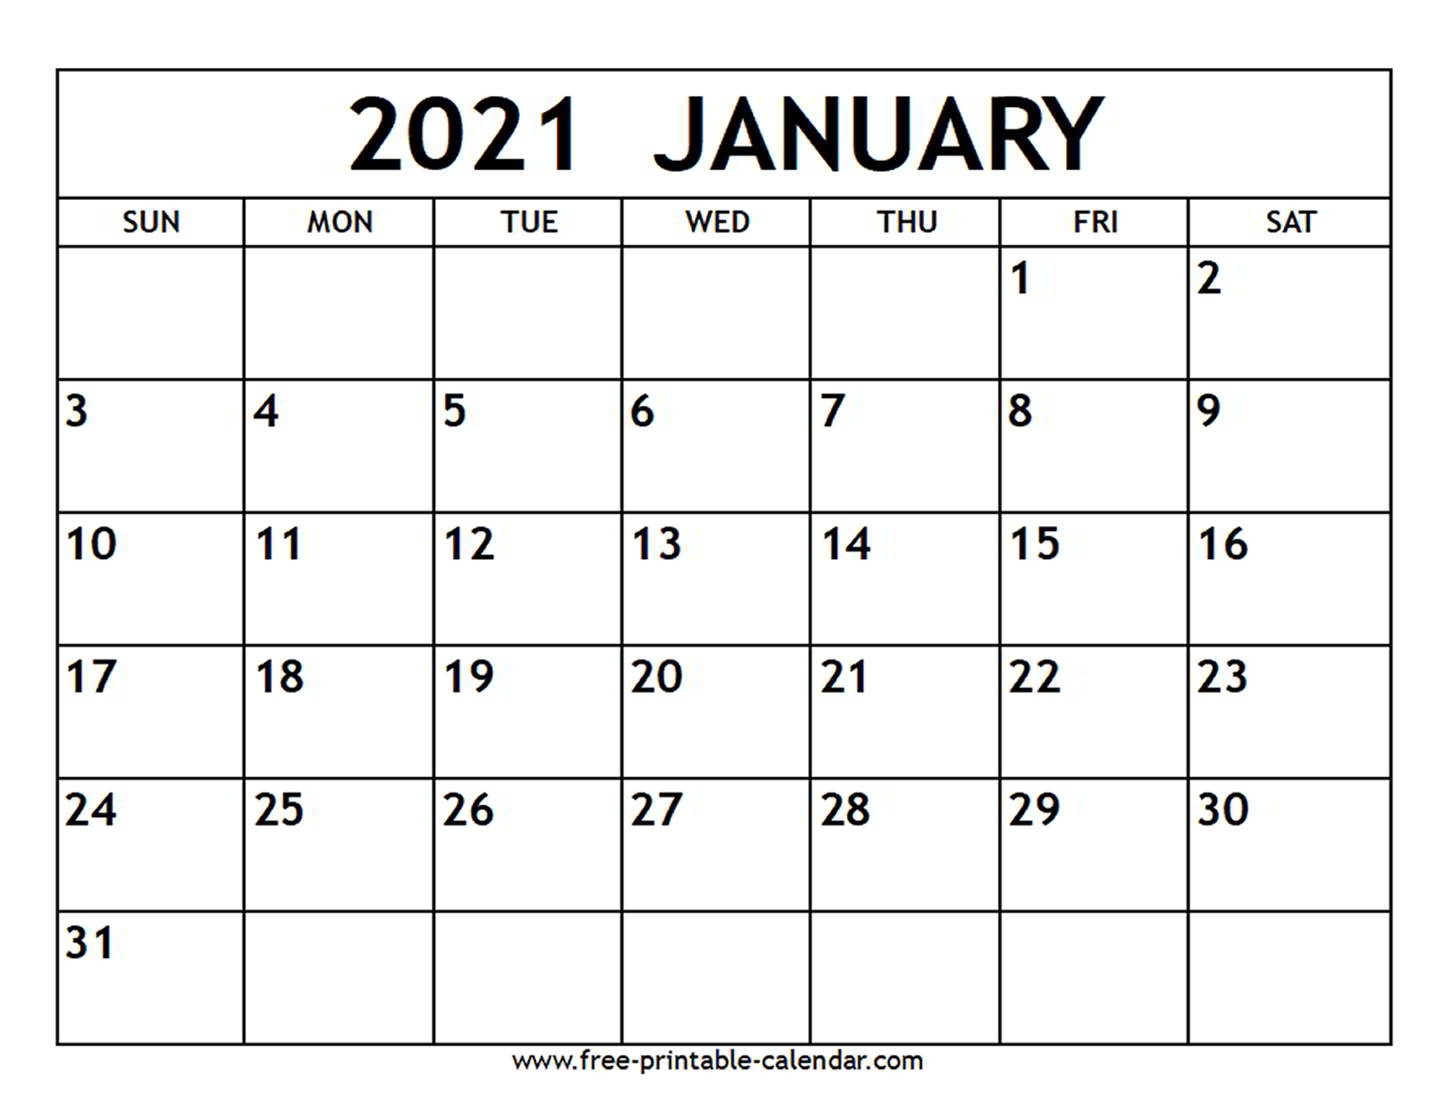 January 2021 Calendar - Free-Printable-Calendar-Free Editable Calendar 2021